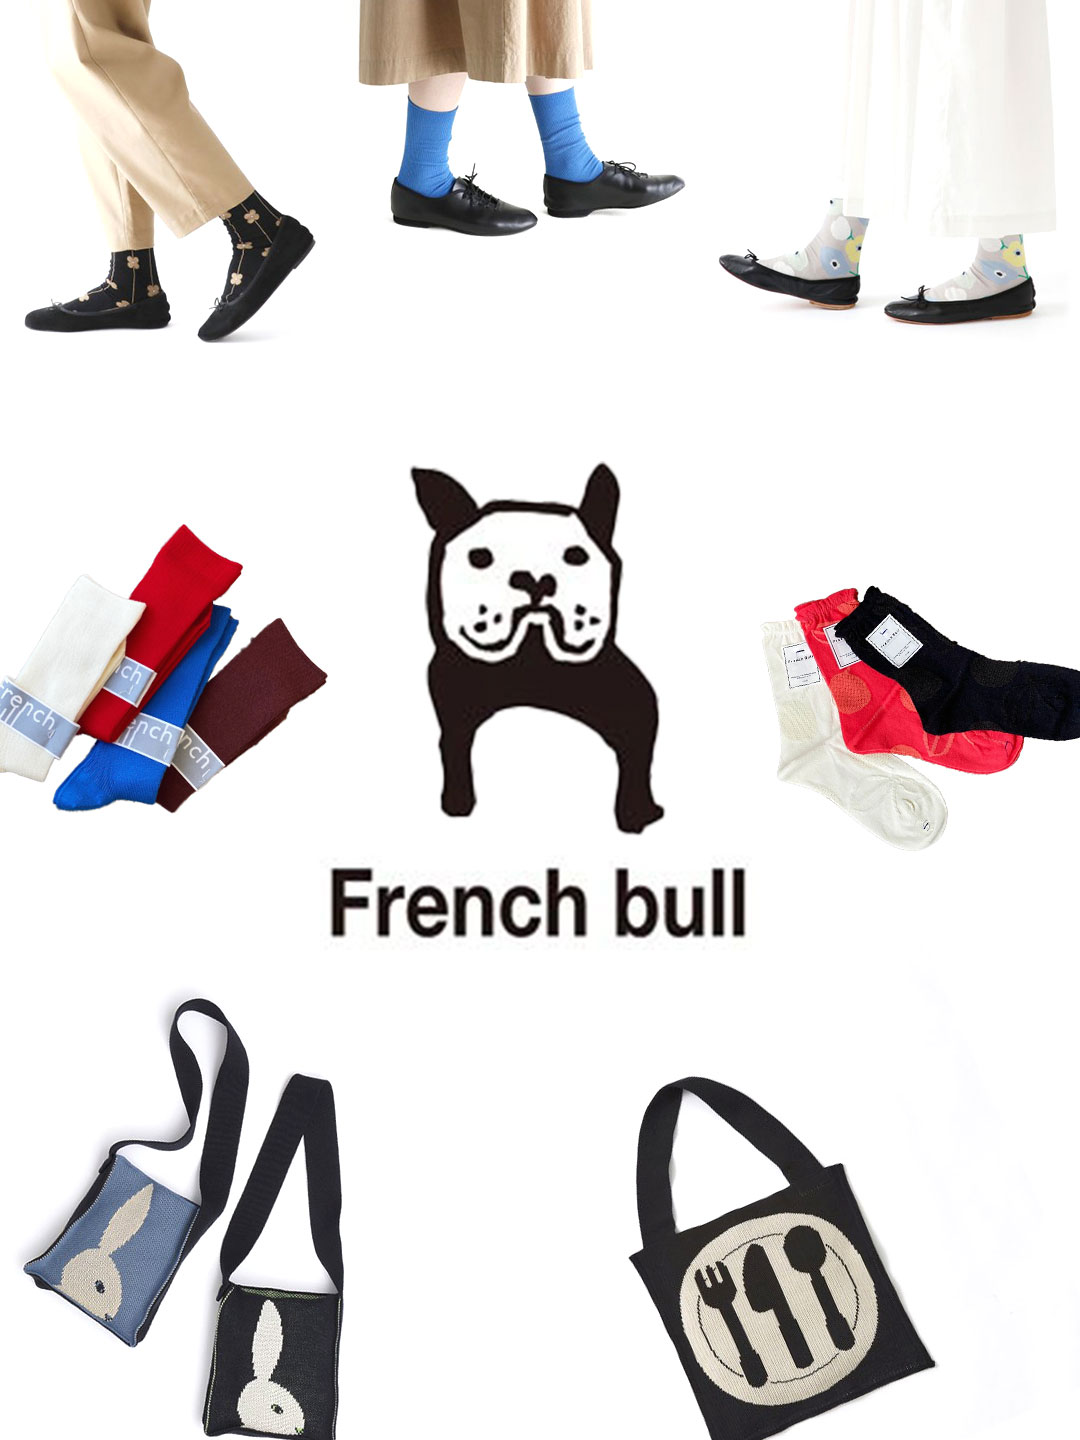 Frenchbull